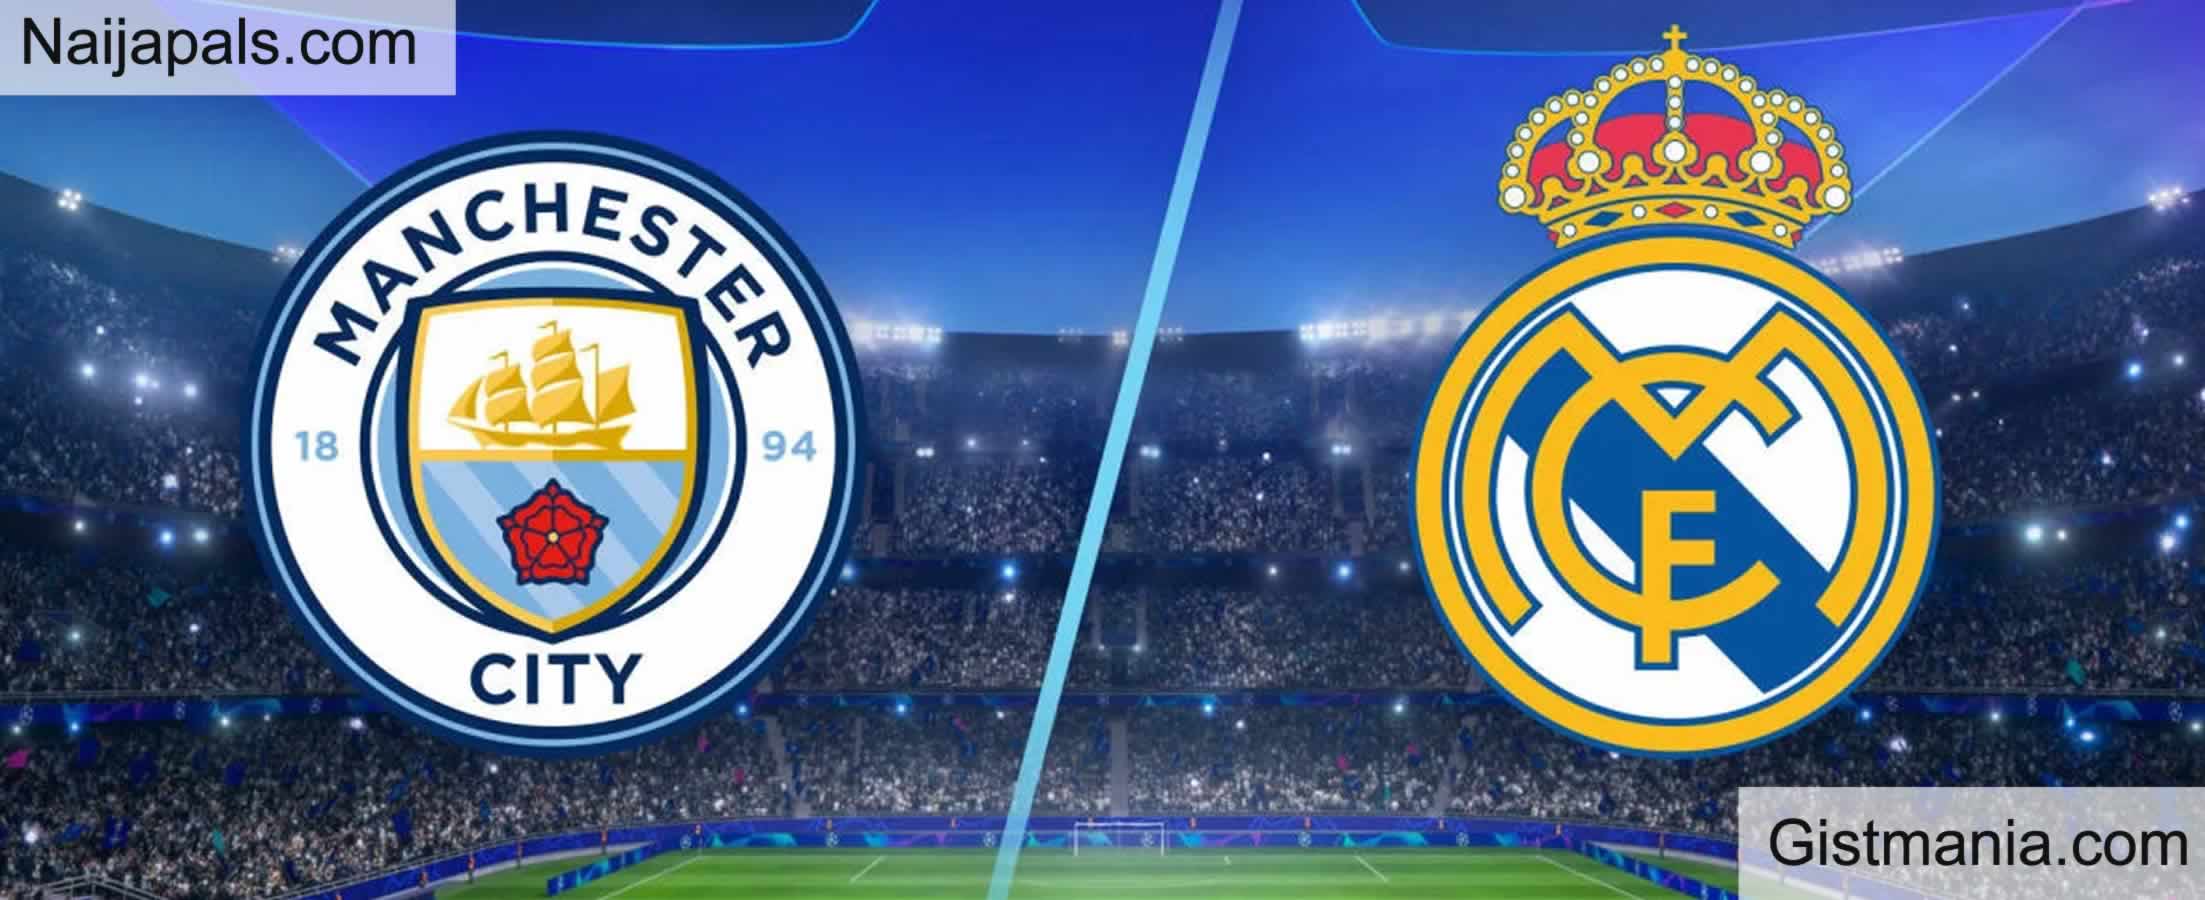 Manchester City v Real Madrid: UEFA Champions League Q/Final Match,Team News,Goal Scorers &Stat